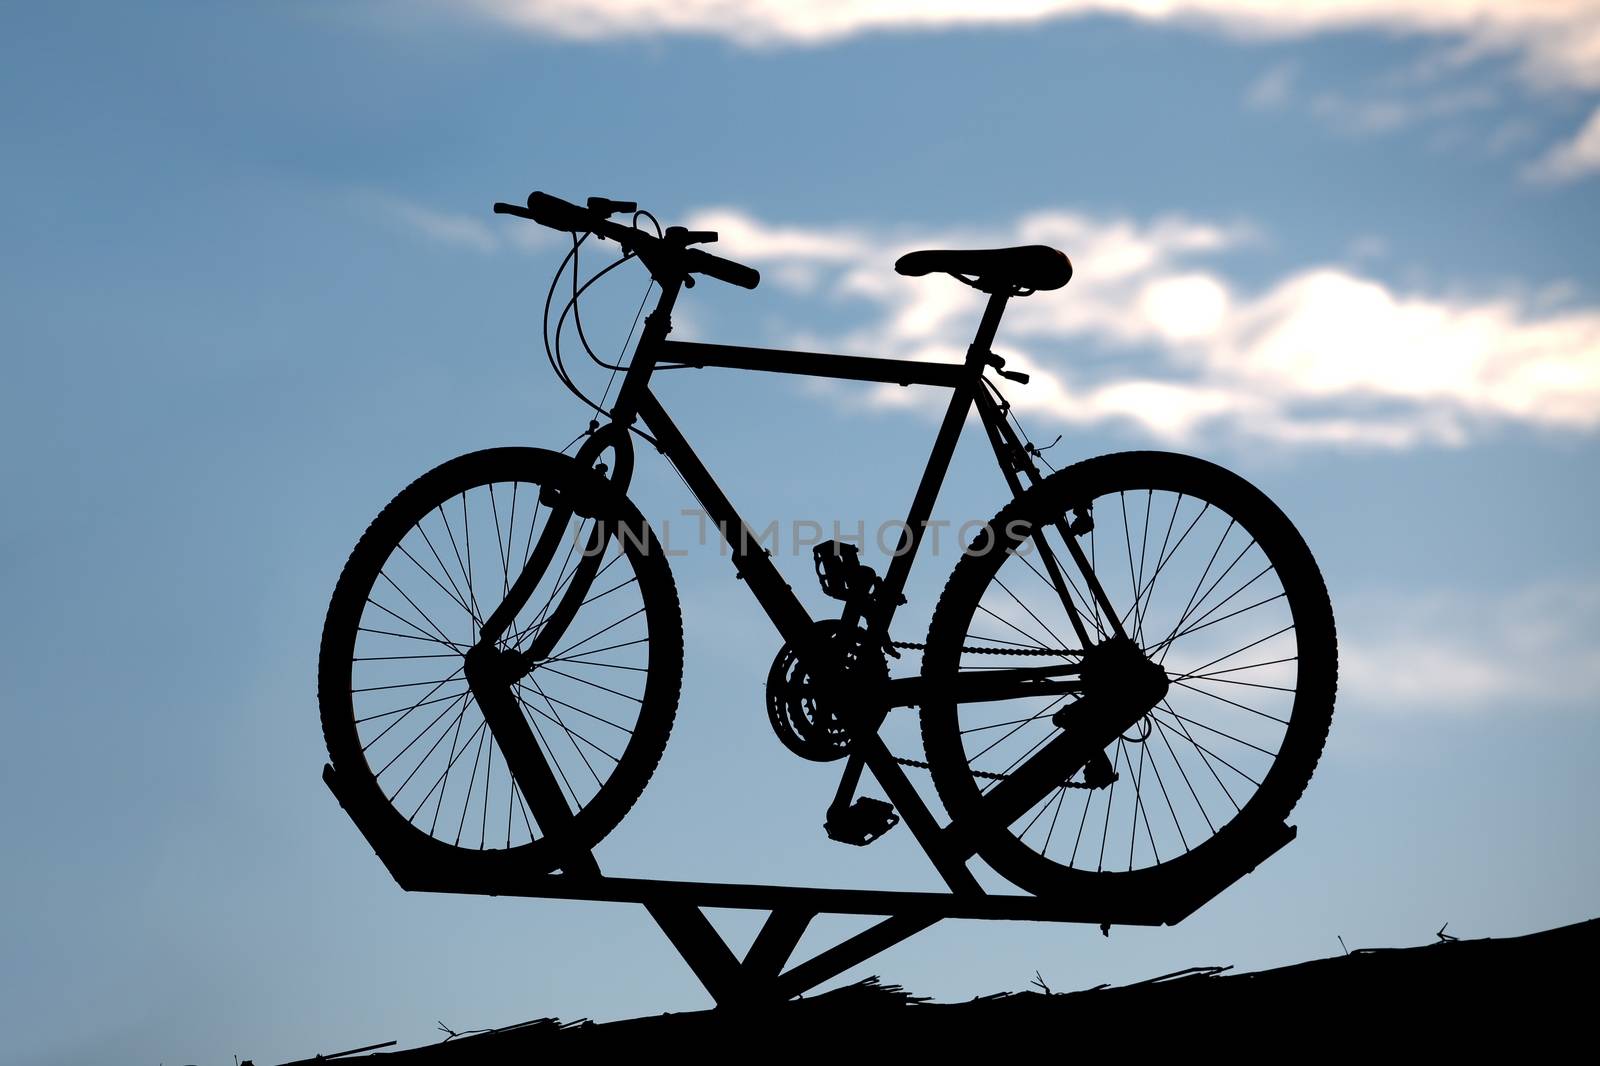 Bicycle display by Gudella